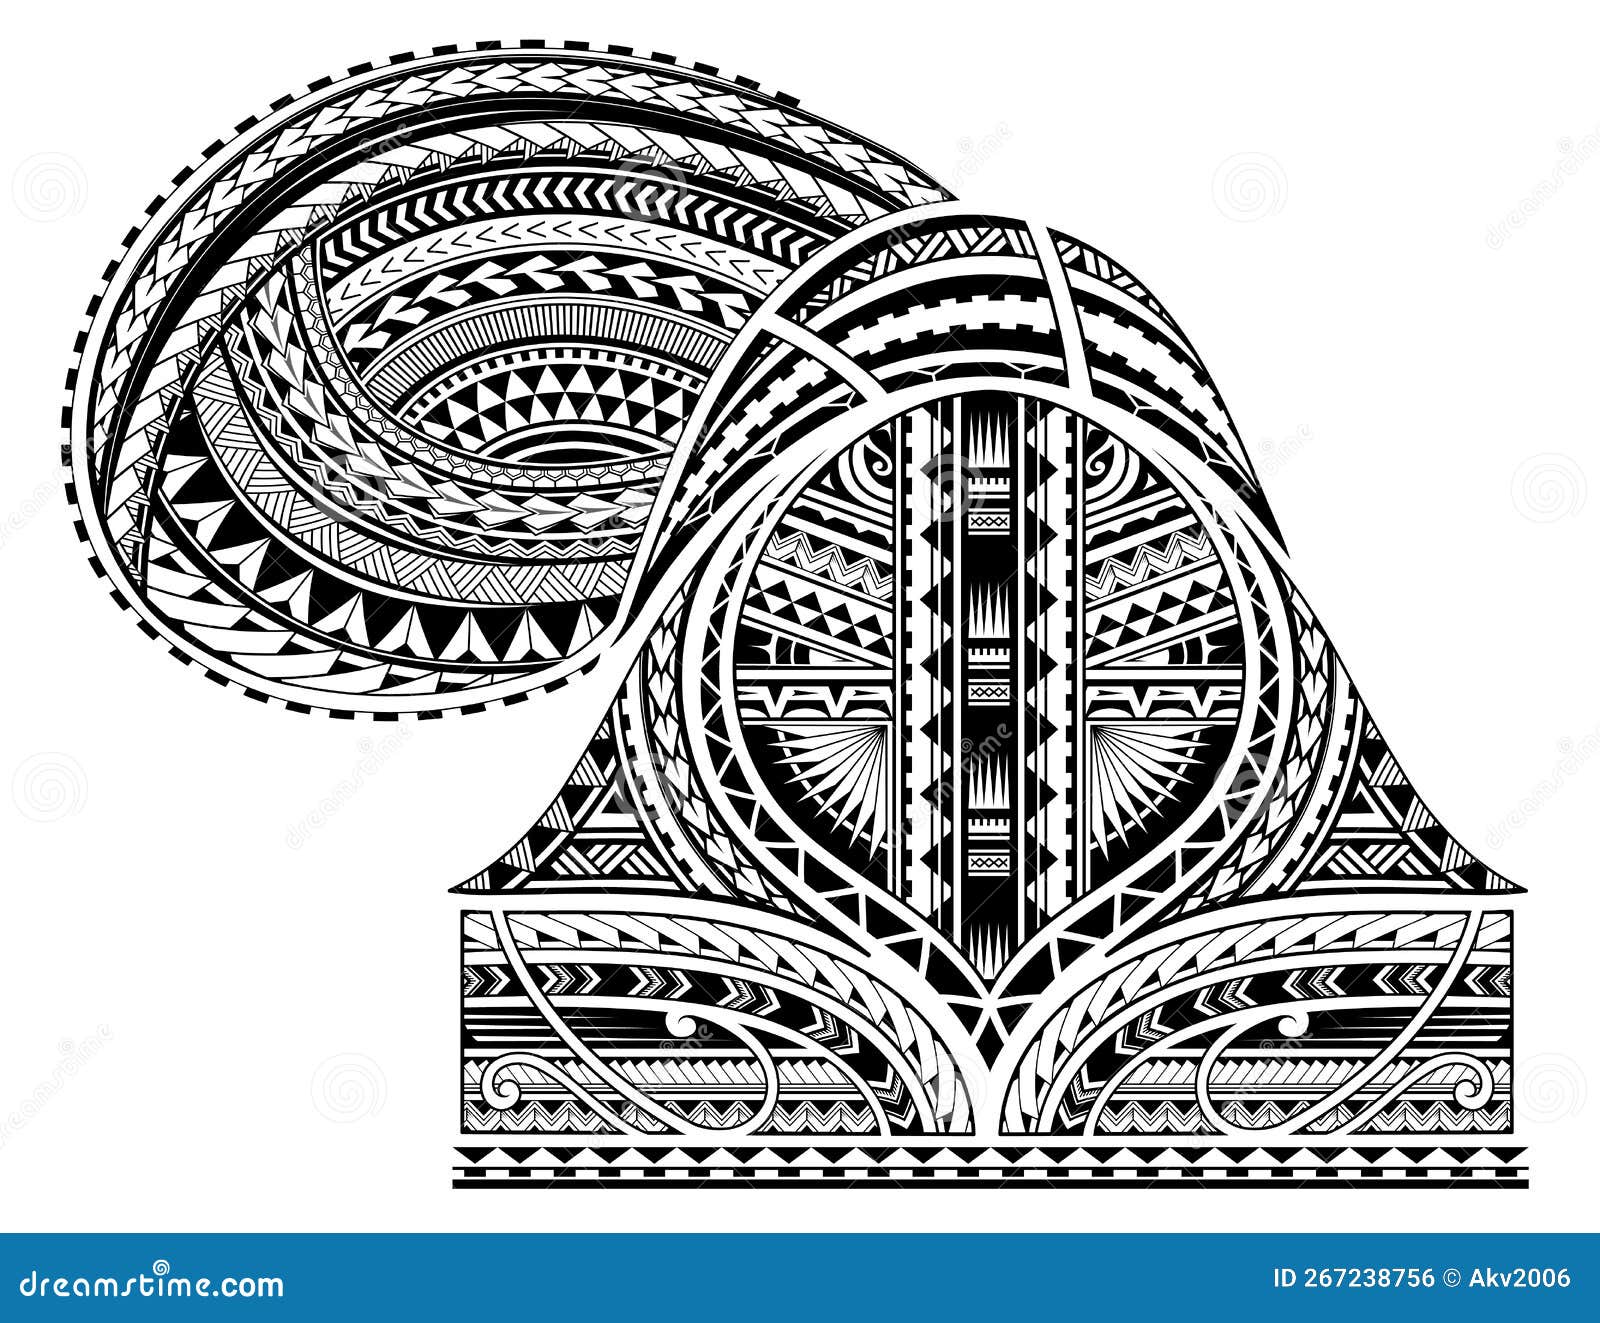 Tribal Sleeve Tattoo Design Stock Vector - Illustration of maori, chest: 267238756